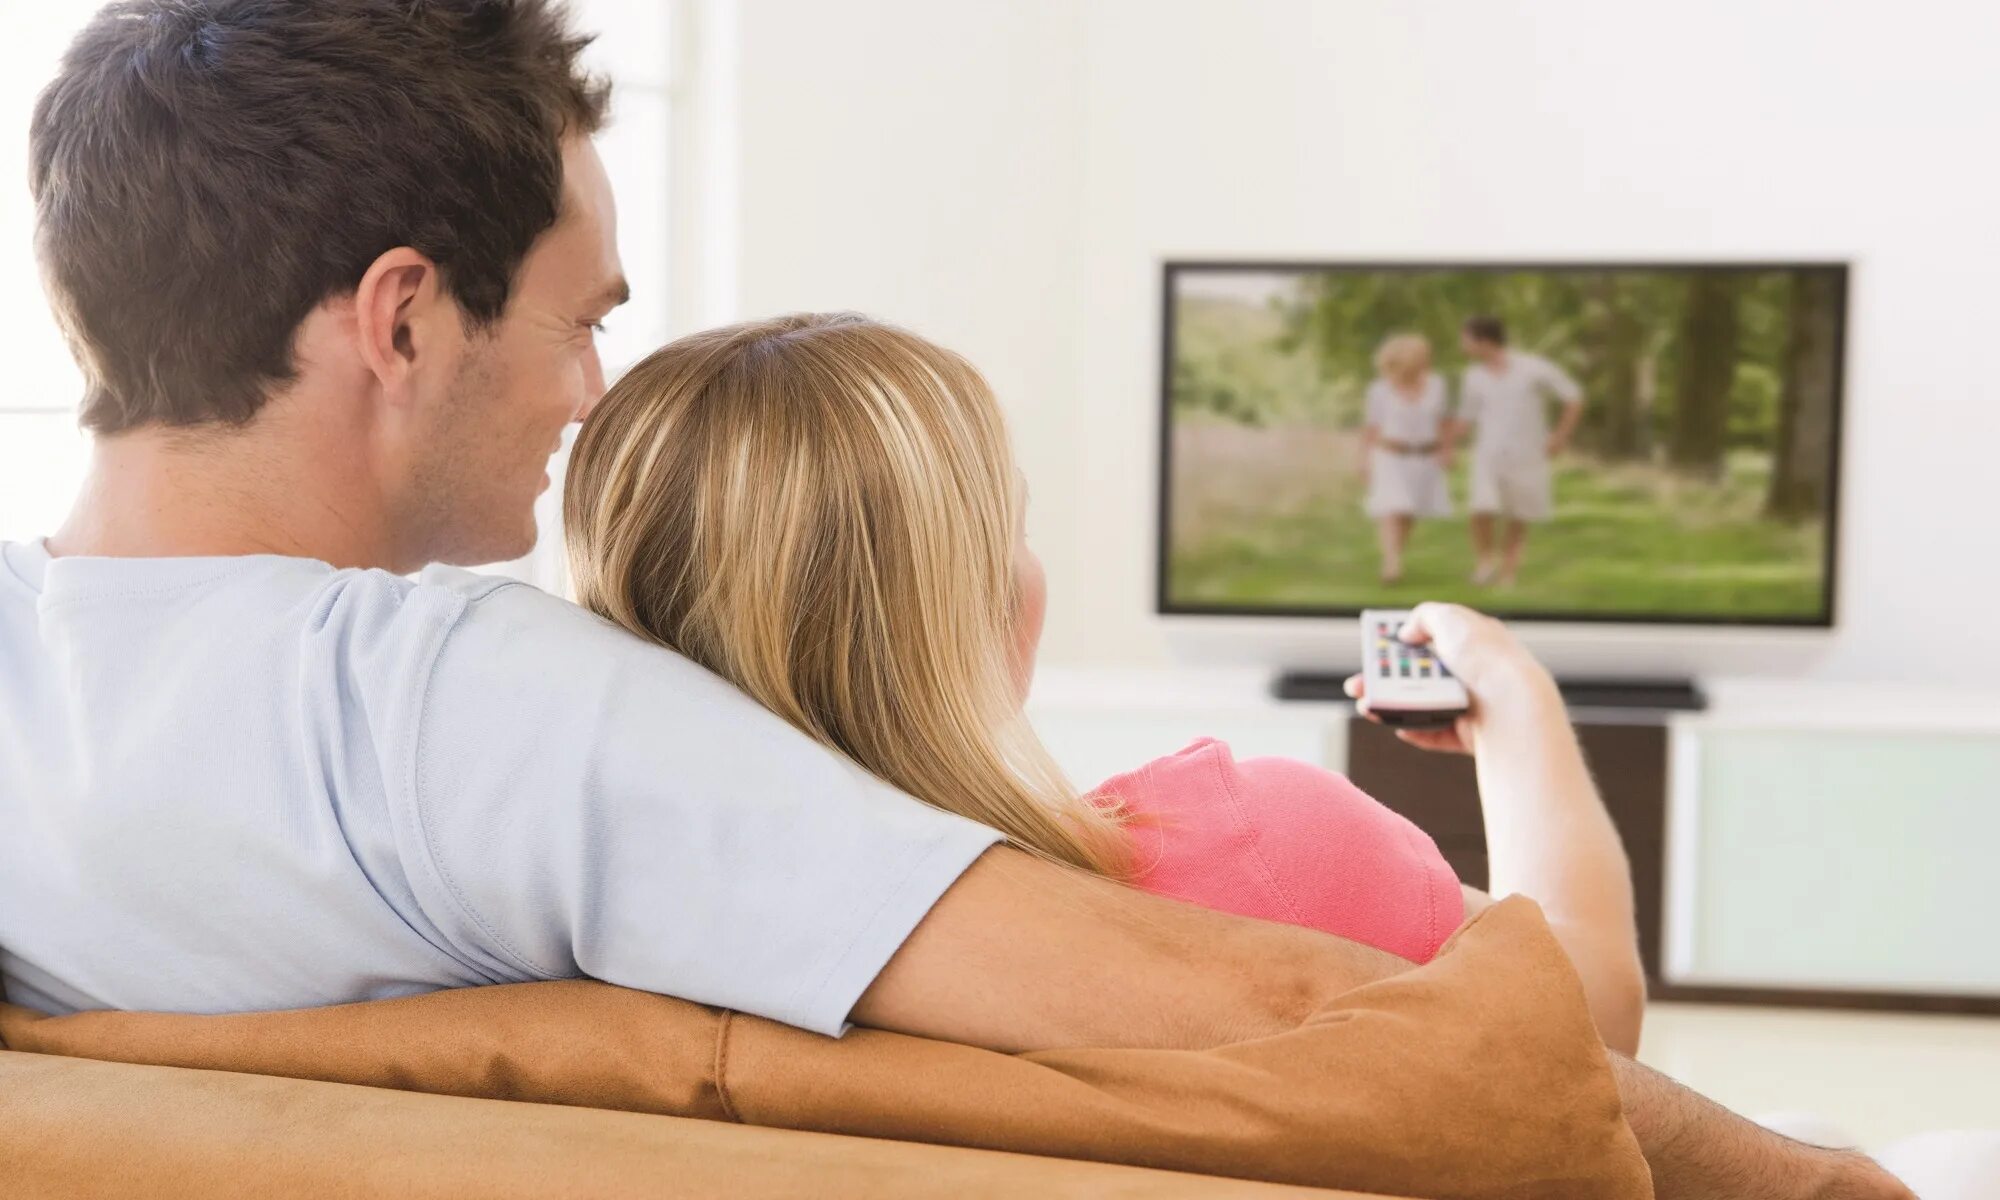 После просмотра телевизора. Человек телевизор. Человек перед телевизором. Пара перед телевизором. Пара на диване перед телевизором.